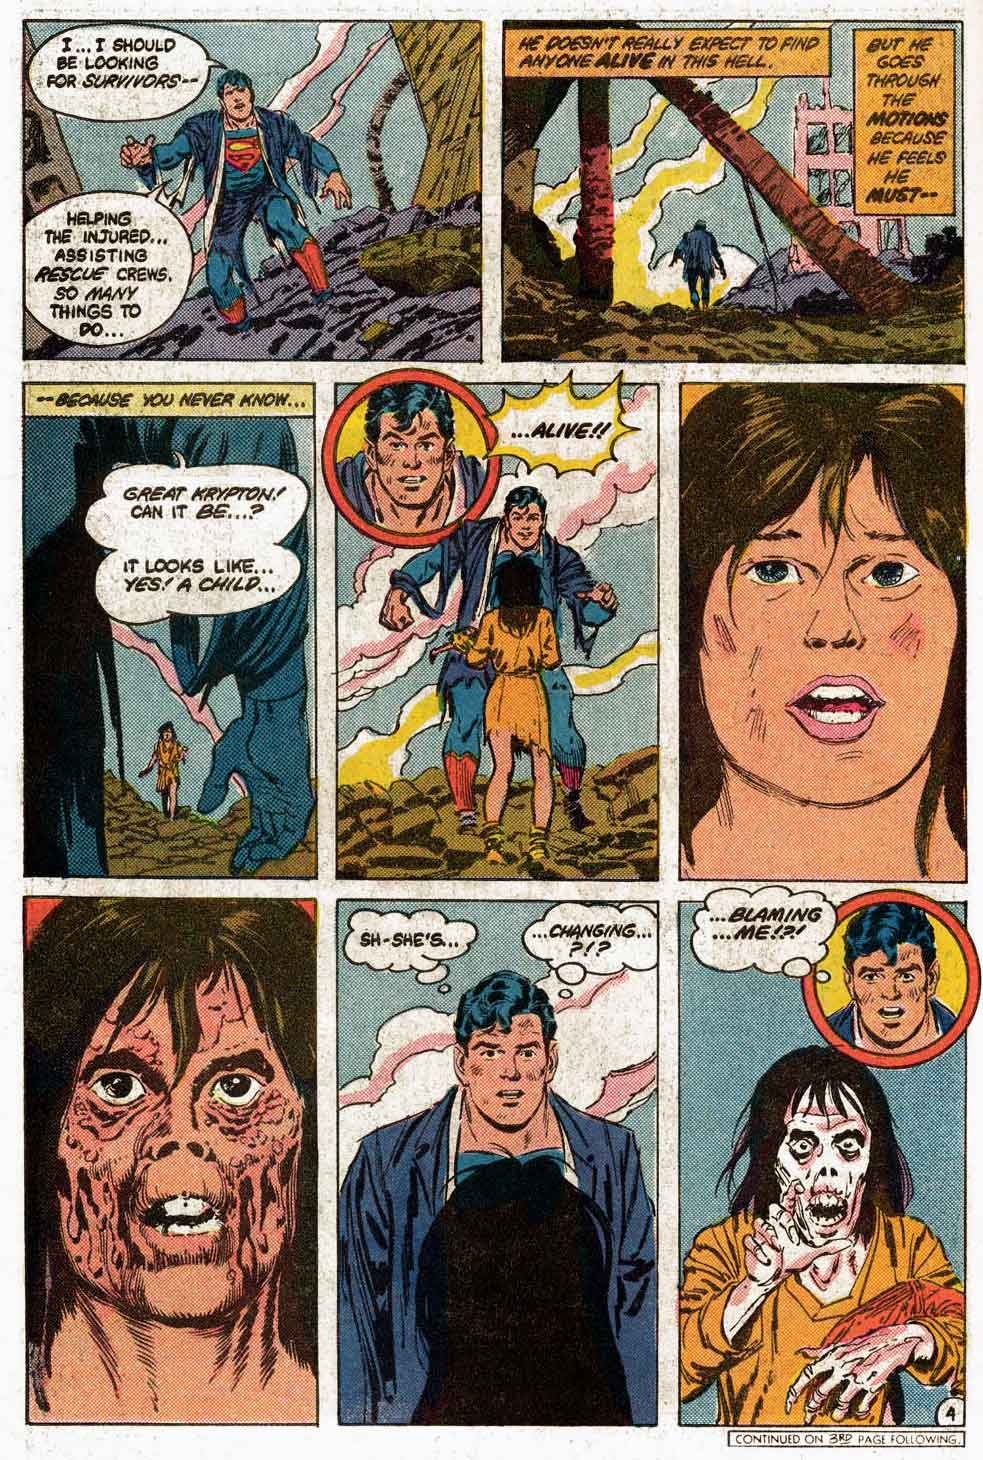 Best of DC Blue Ribbon Digest #71: Year's Best Comics Stories